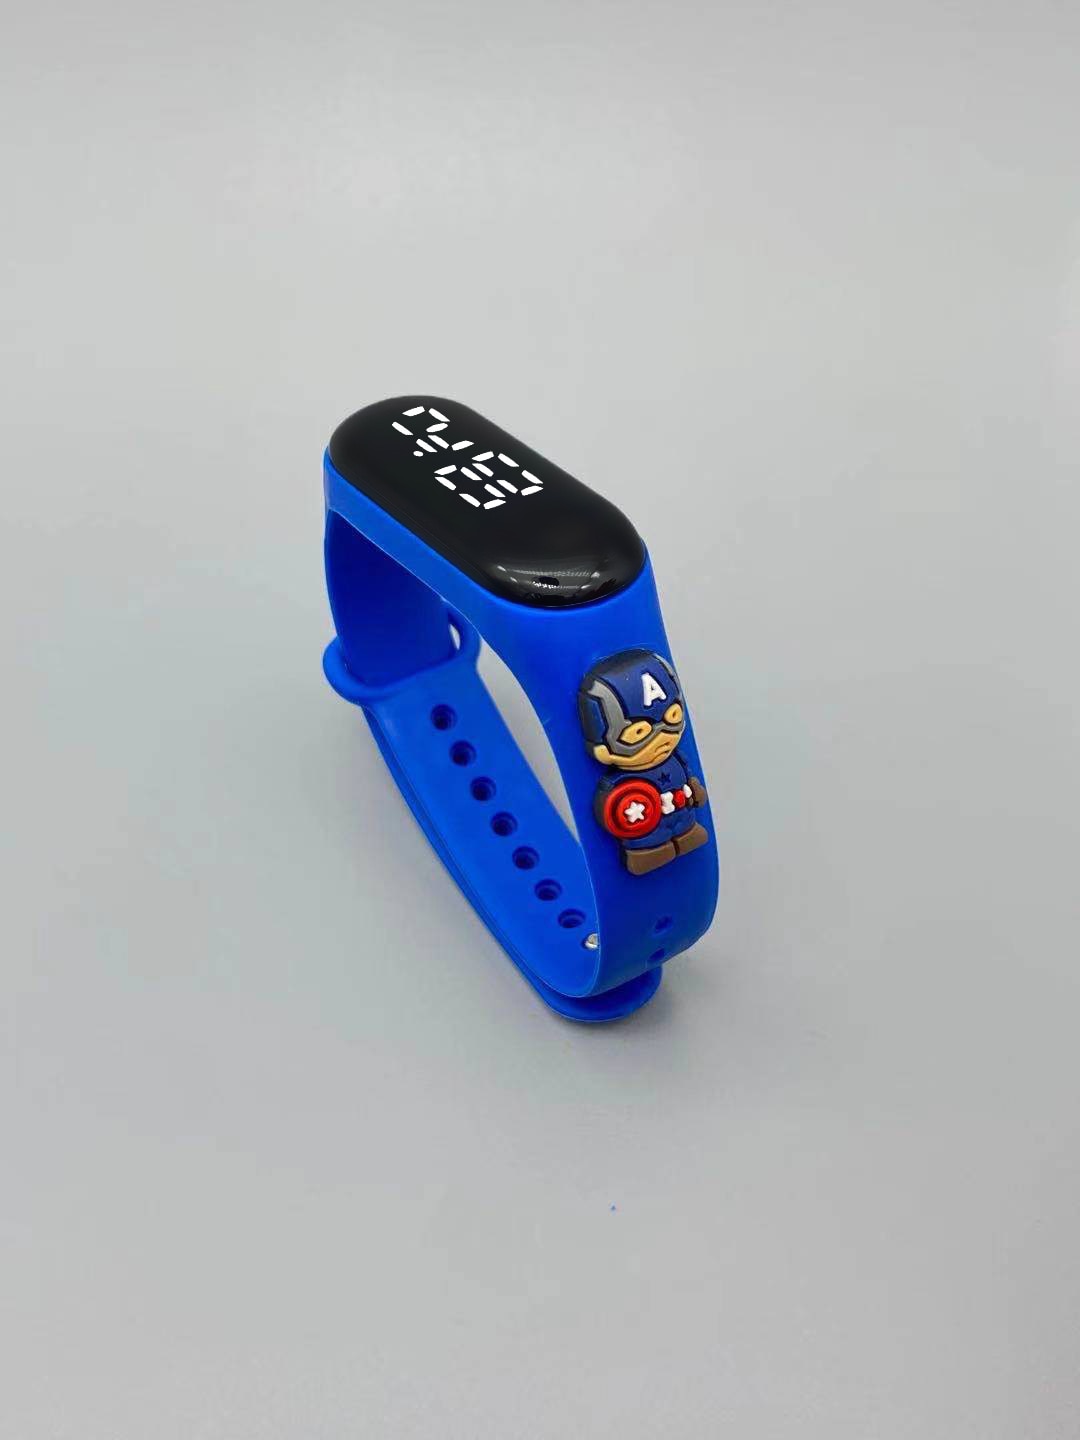 Disney Mickey Minnie LED Touch Watch Pooh Bear Bracelet Watch Student Children Sports Cartoon Electronic Watch Birthday Gifts.